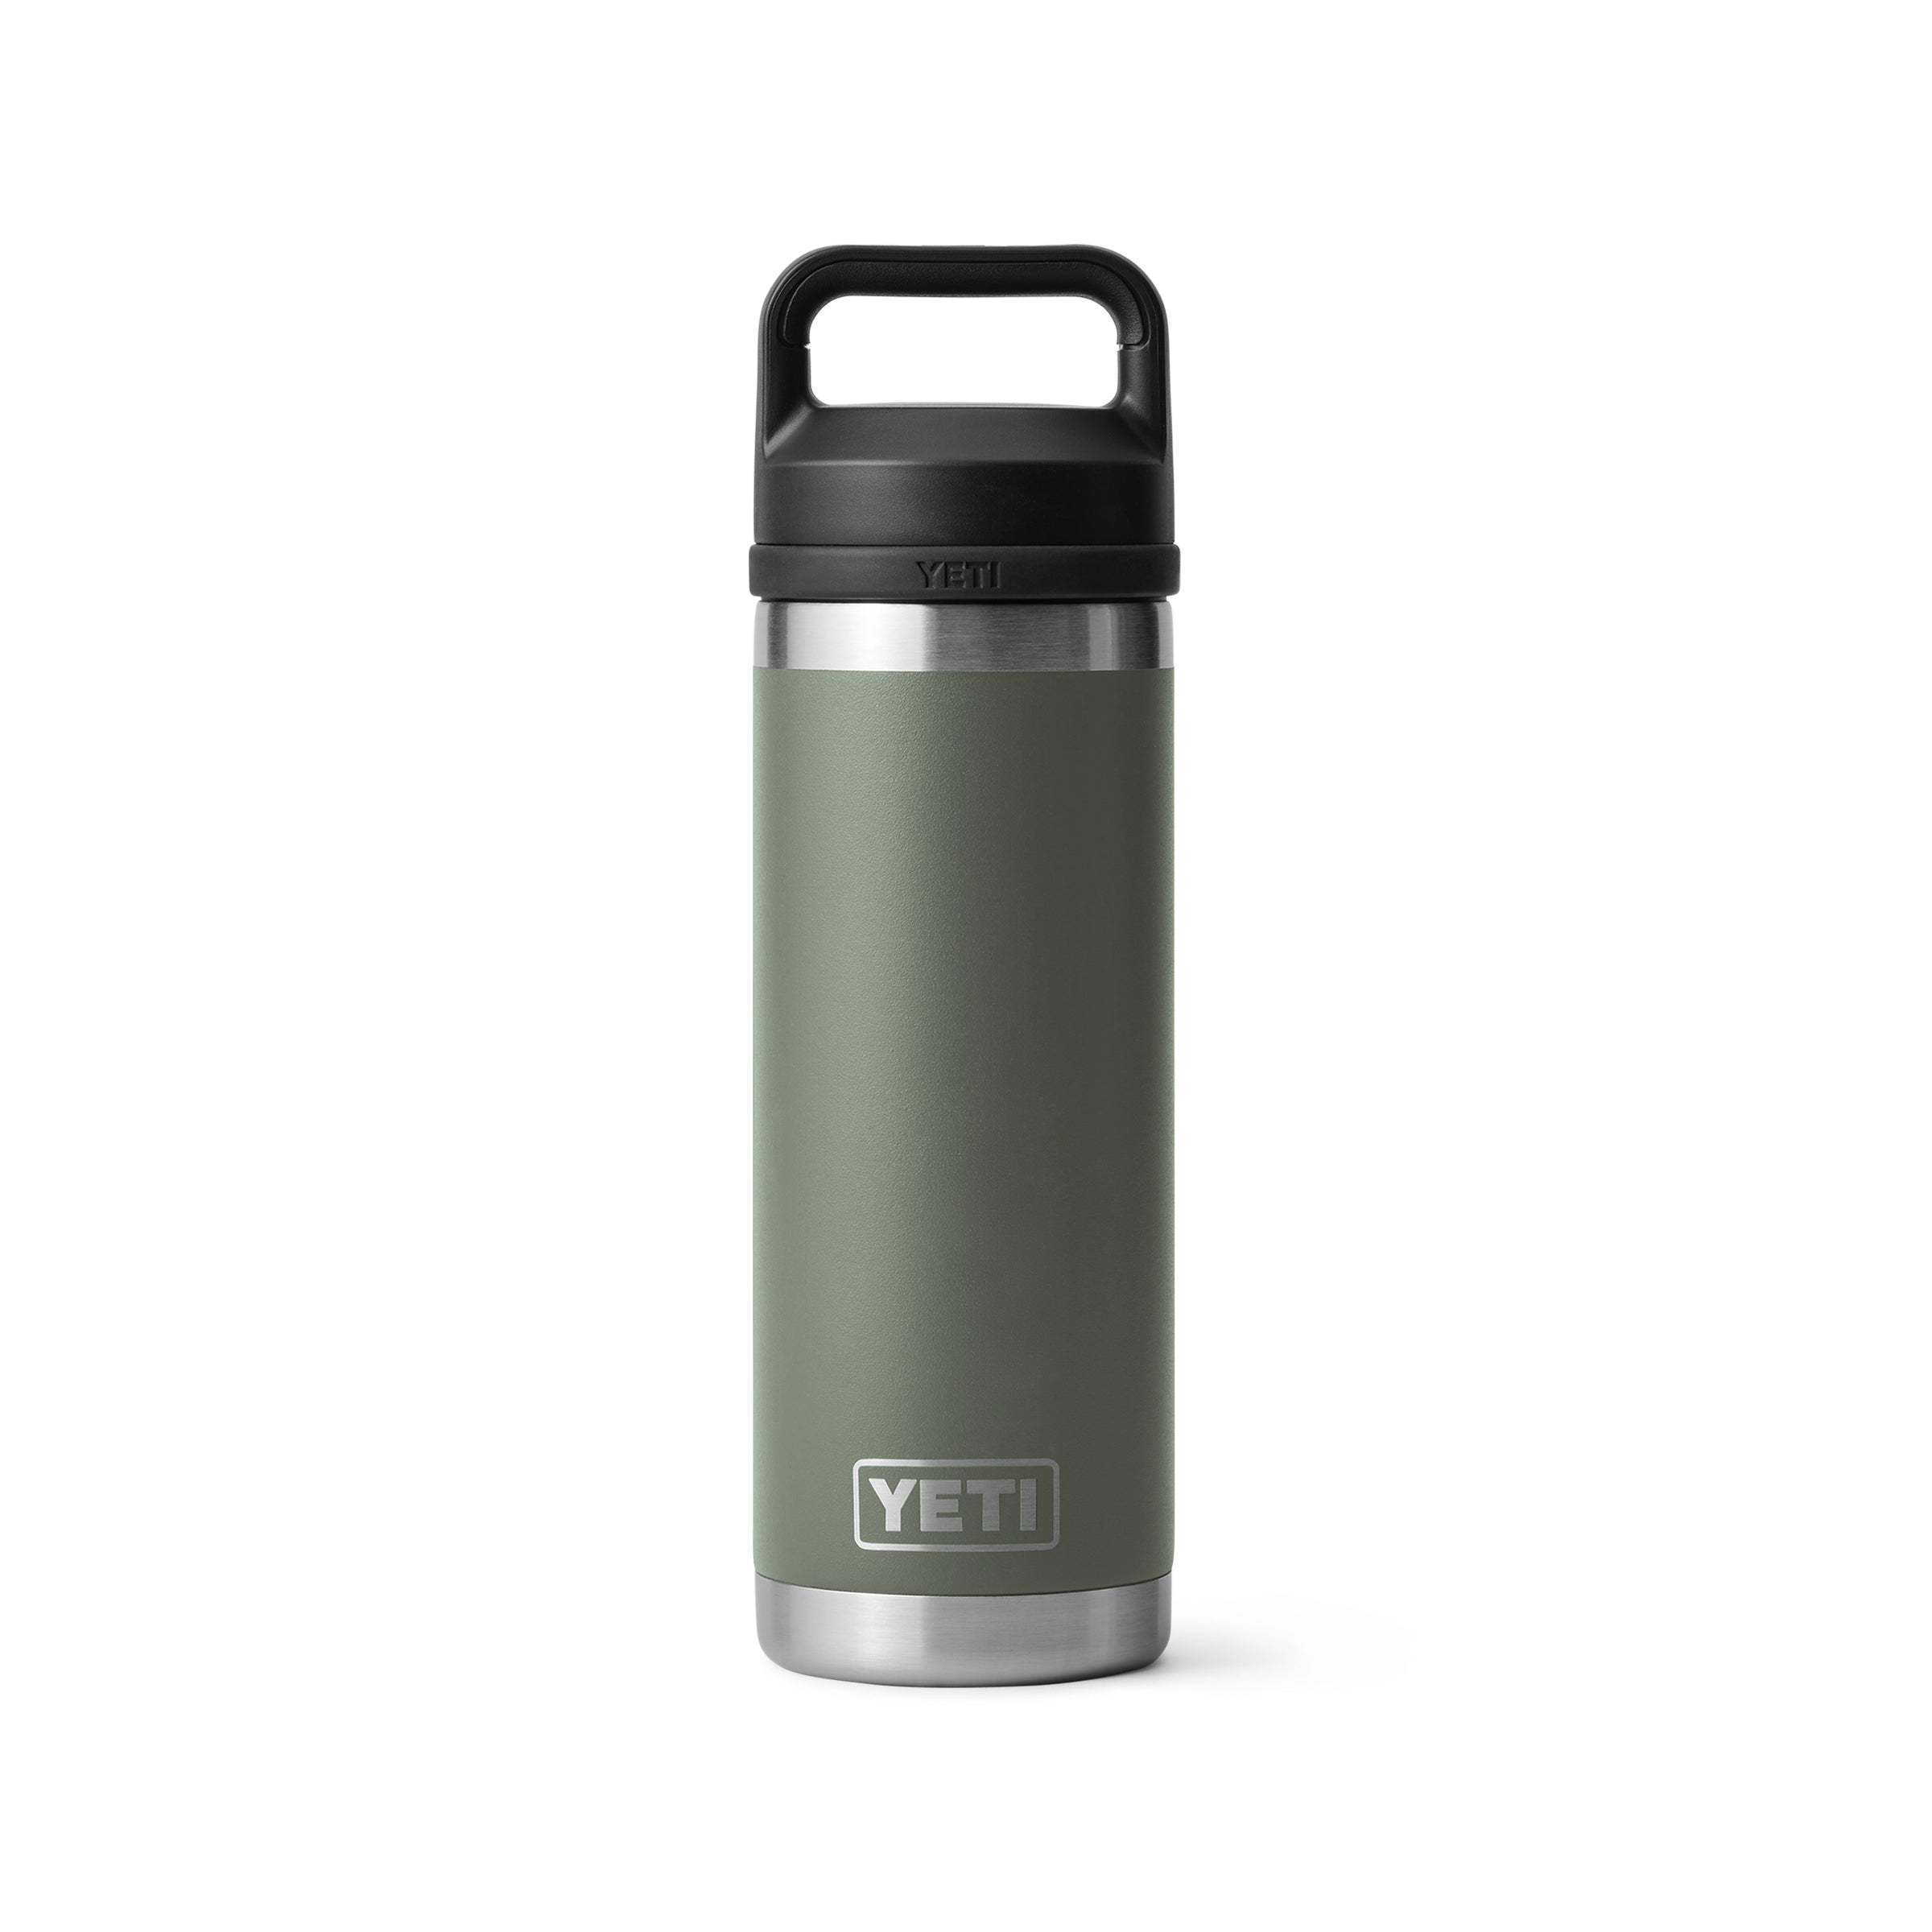 A YETI Rambler 18 oz Bottle with a Chug cap, in Camp Green.